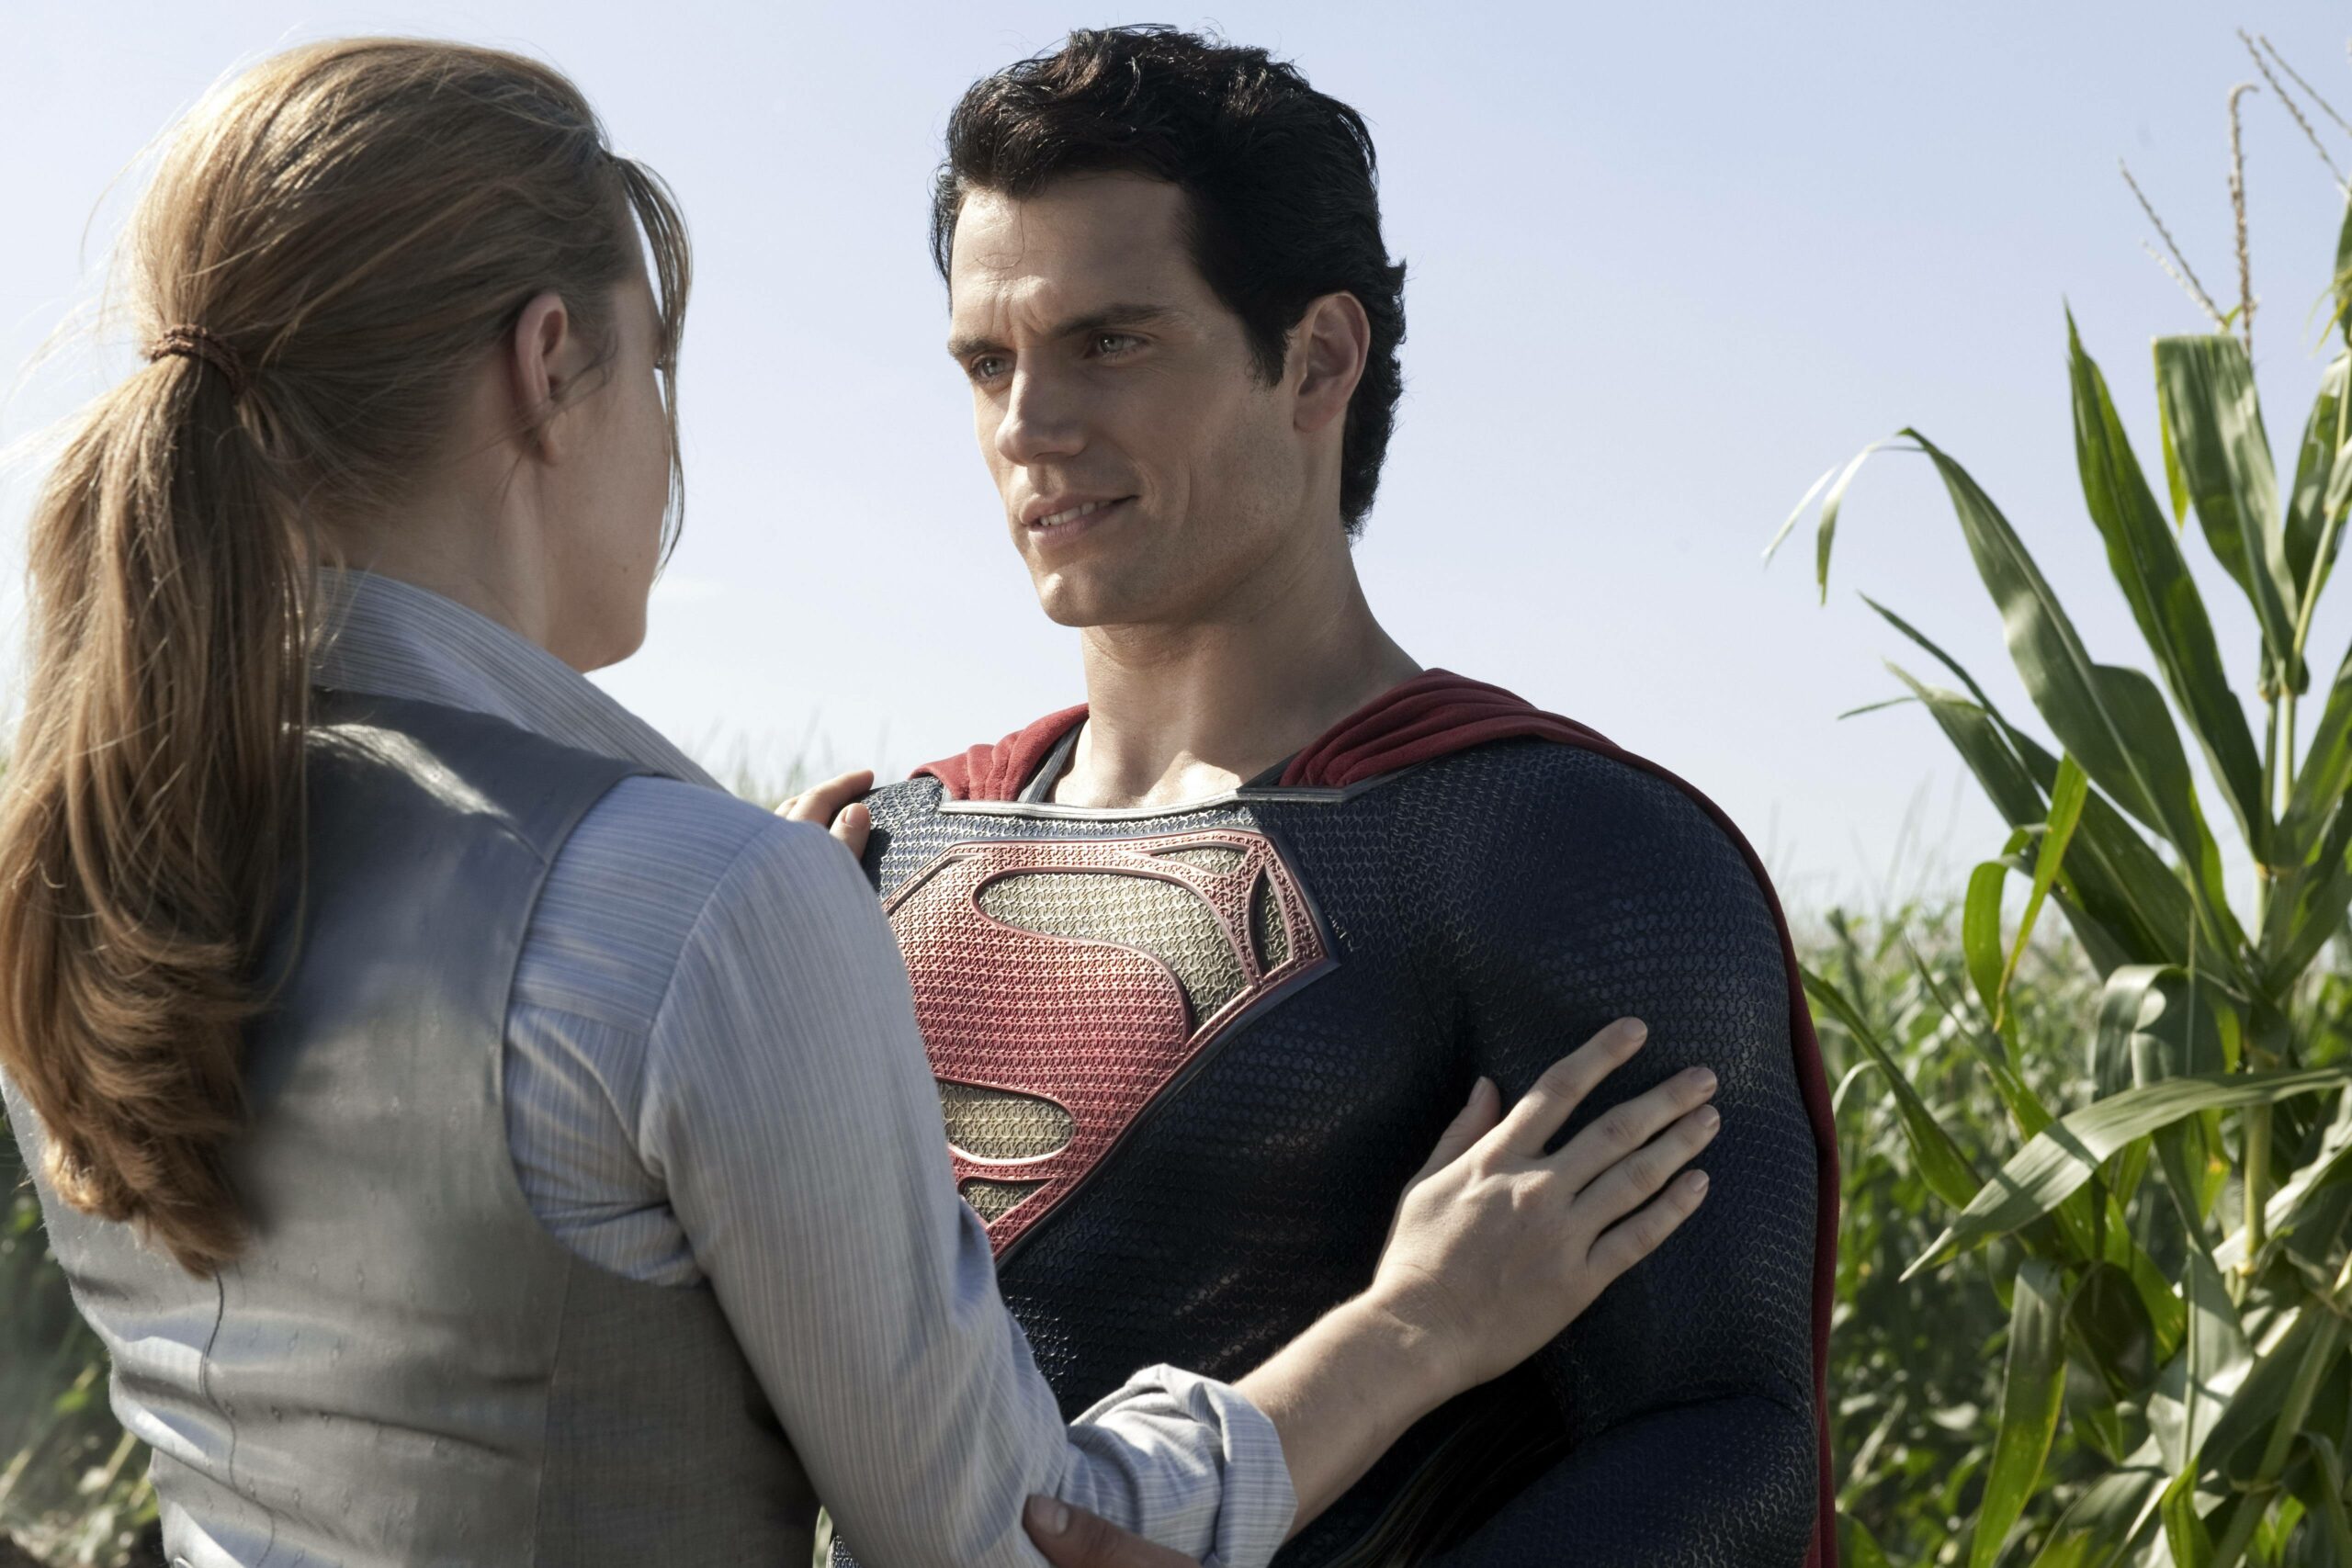 James Gunn's Fresh Take: From California's 'Man of Steel' to Atlanta's 'Superman: Legacy' Adventure